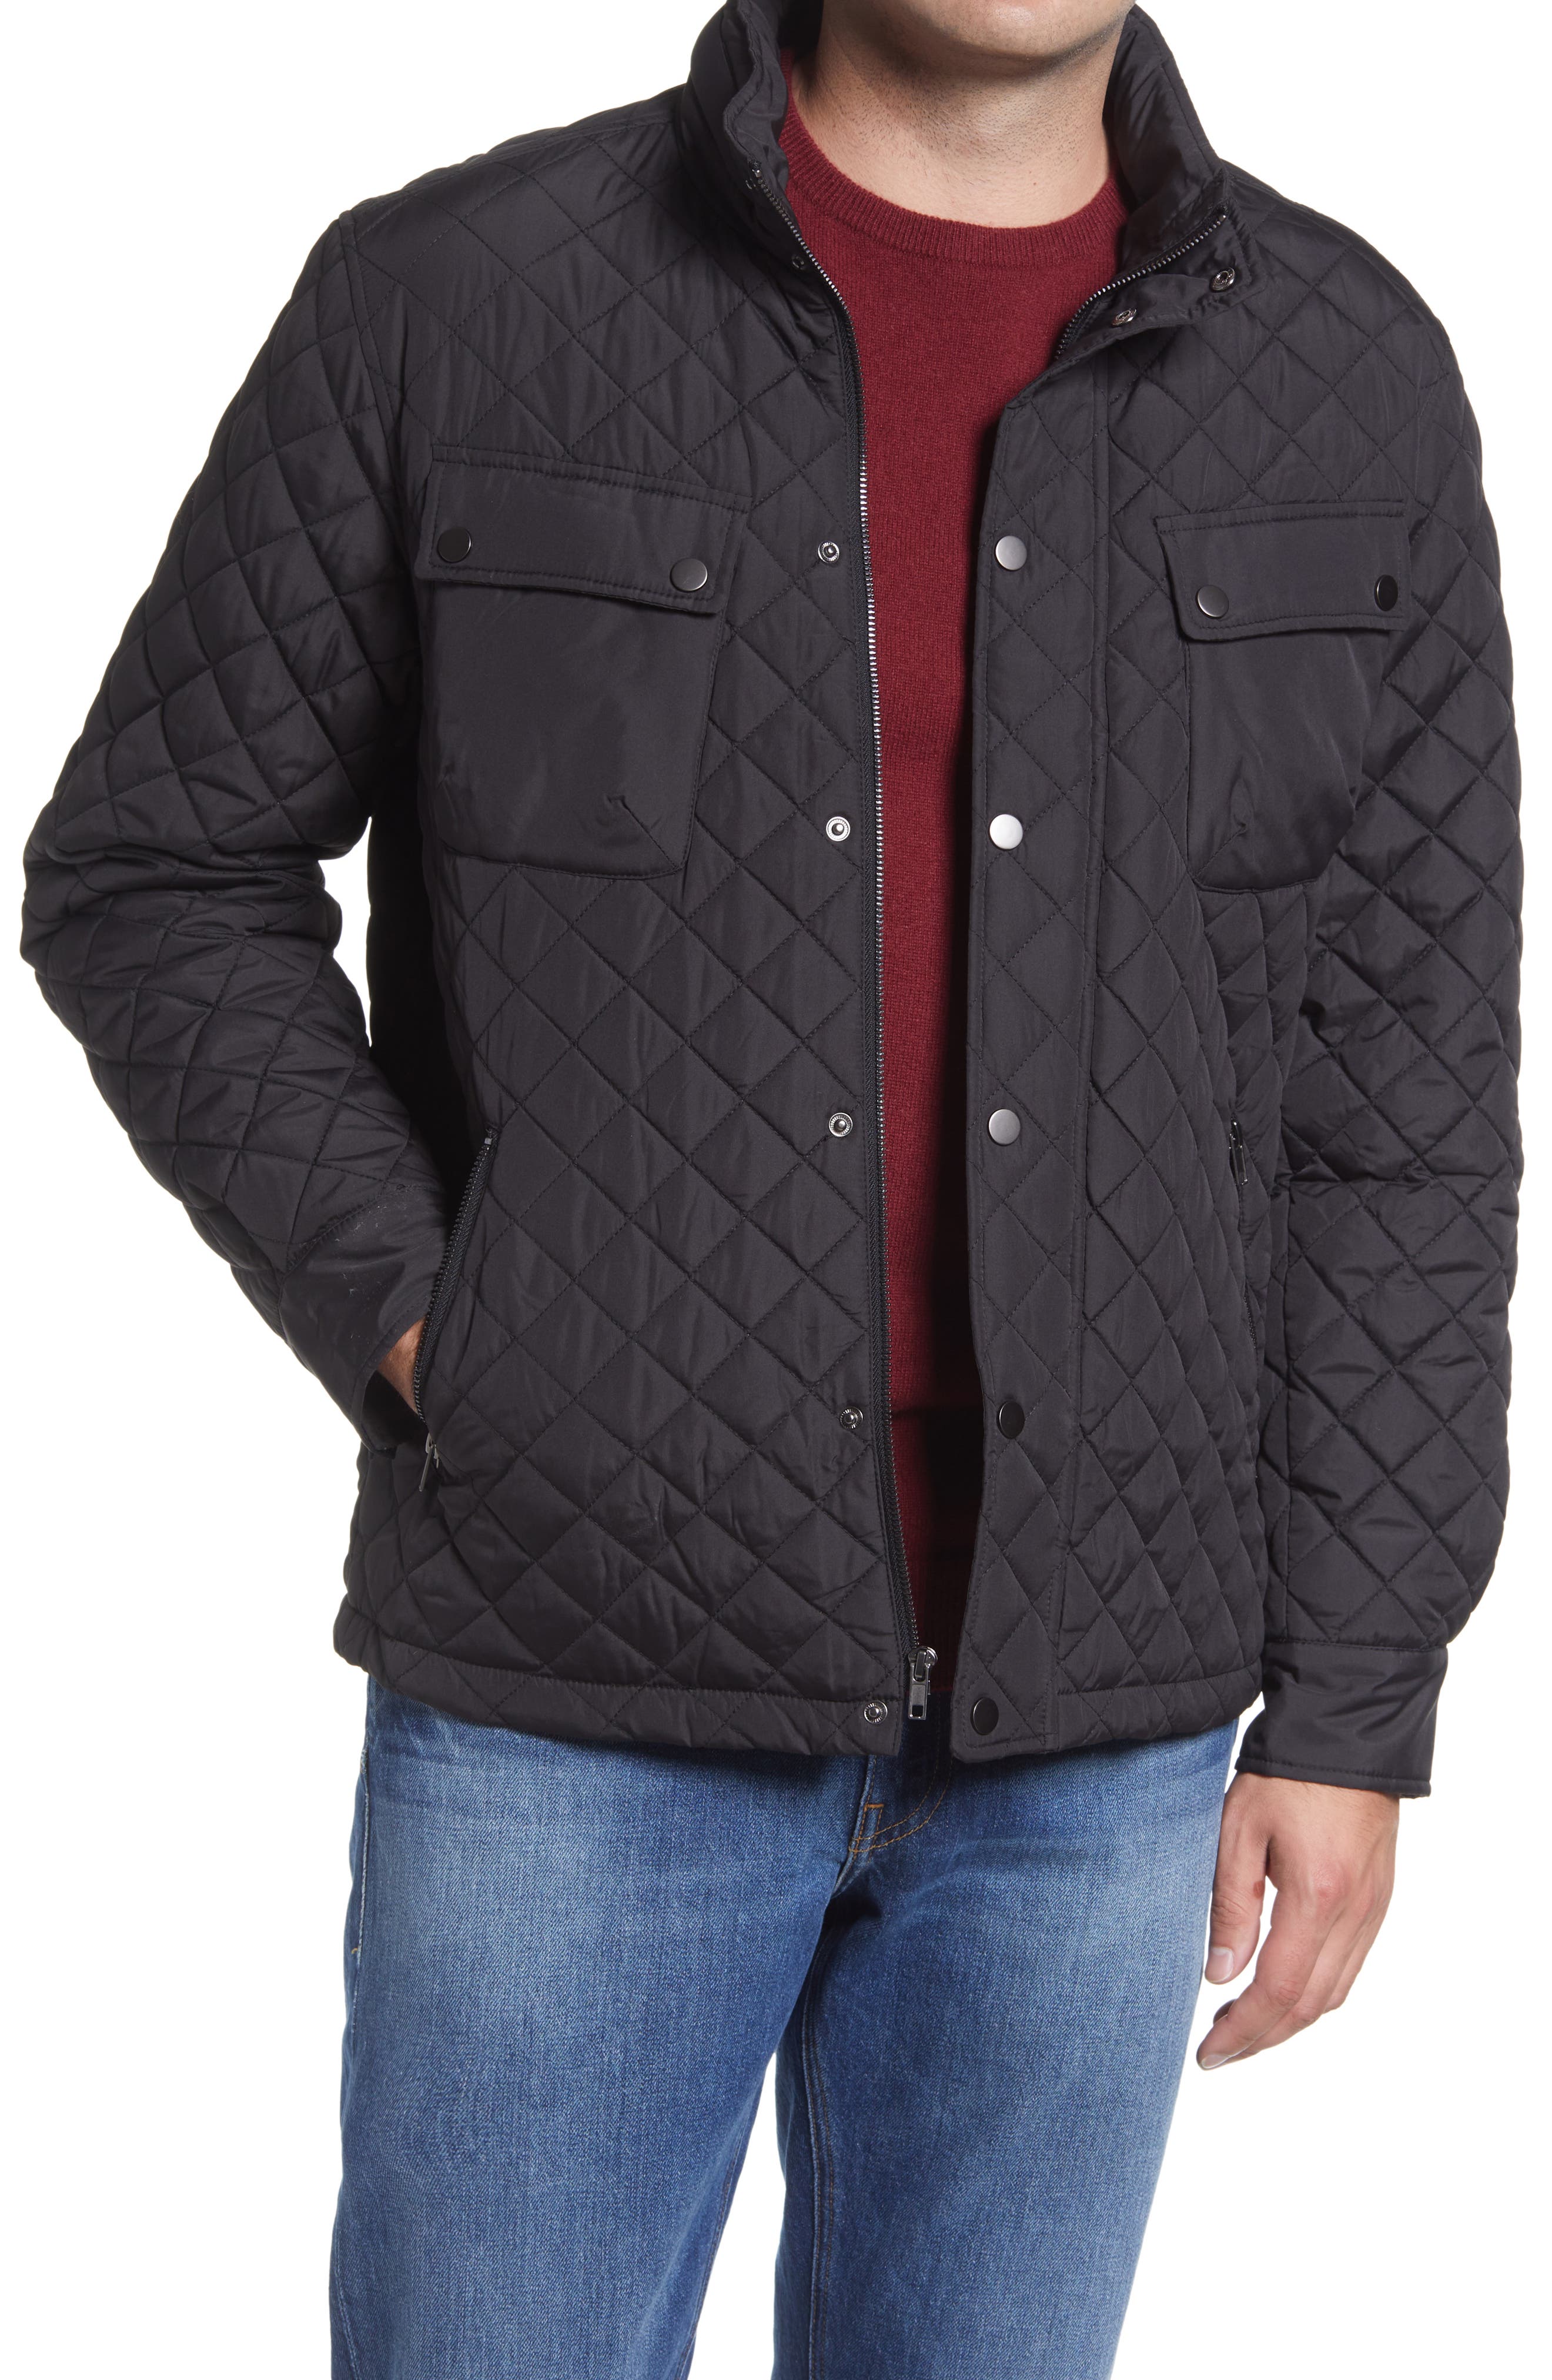 discount 65% Adidas light jacket Gray XL MEN FASHION Jackets Sports 